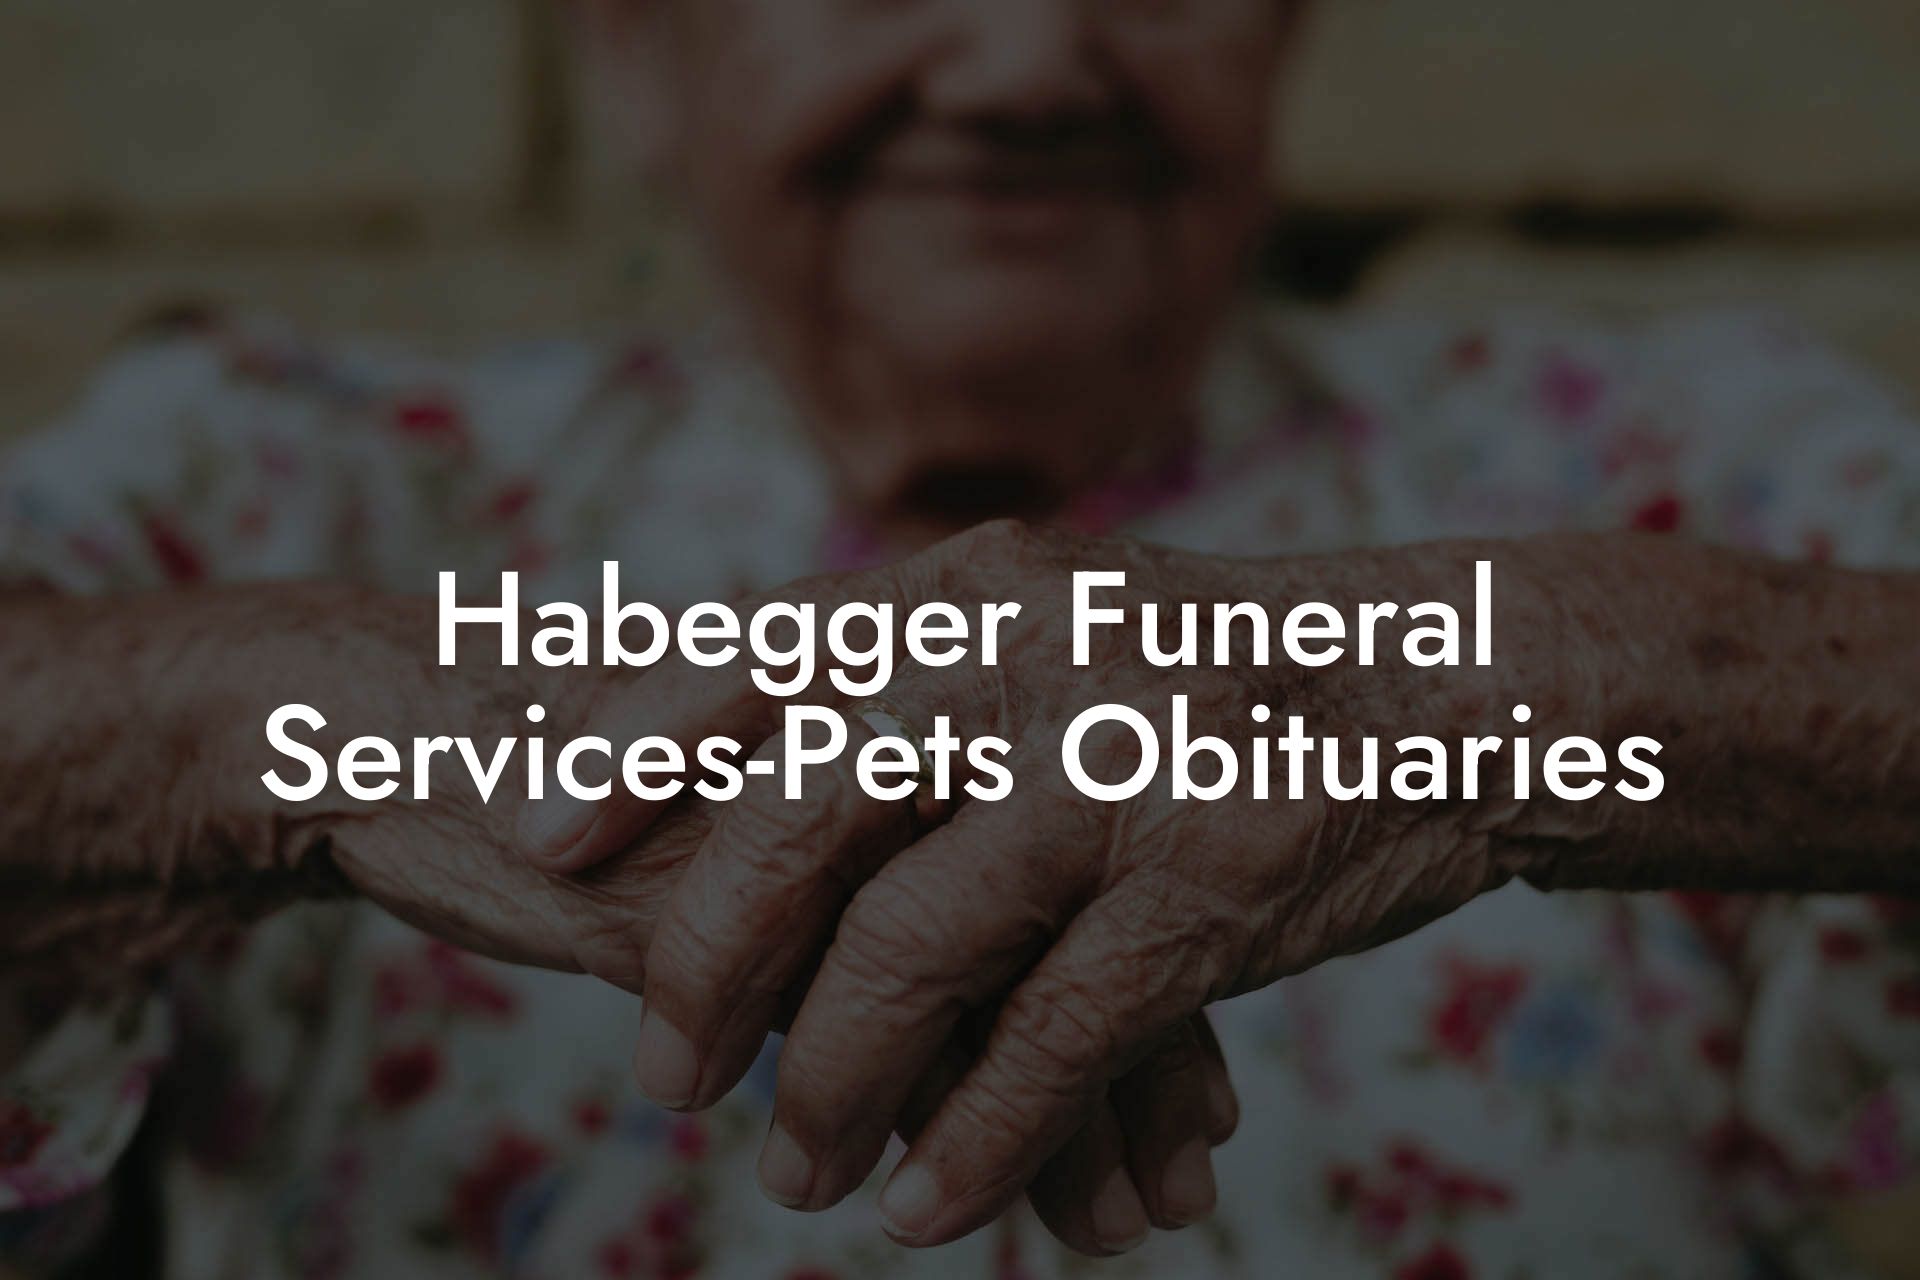 Habegger Funeral Services-Pets Obituaries